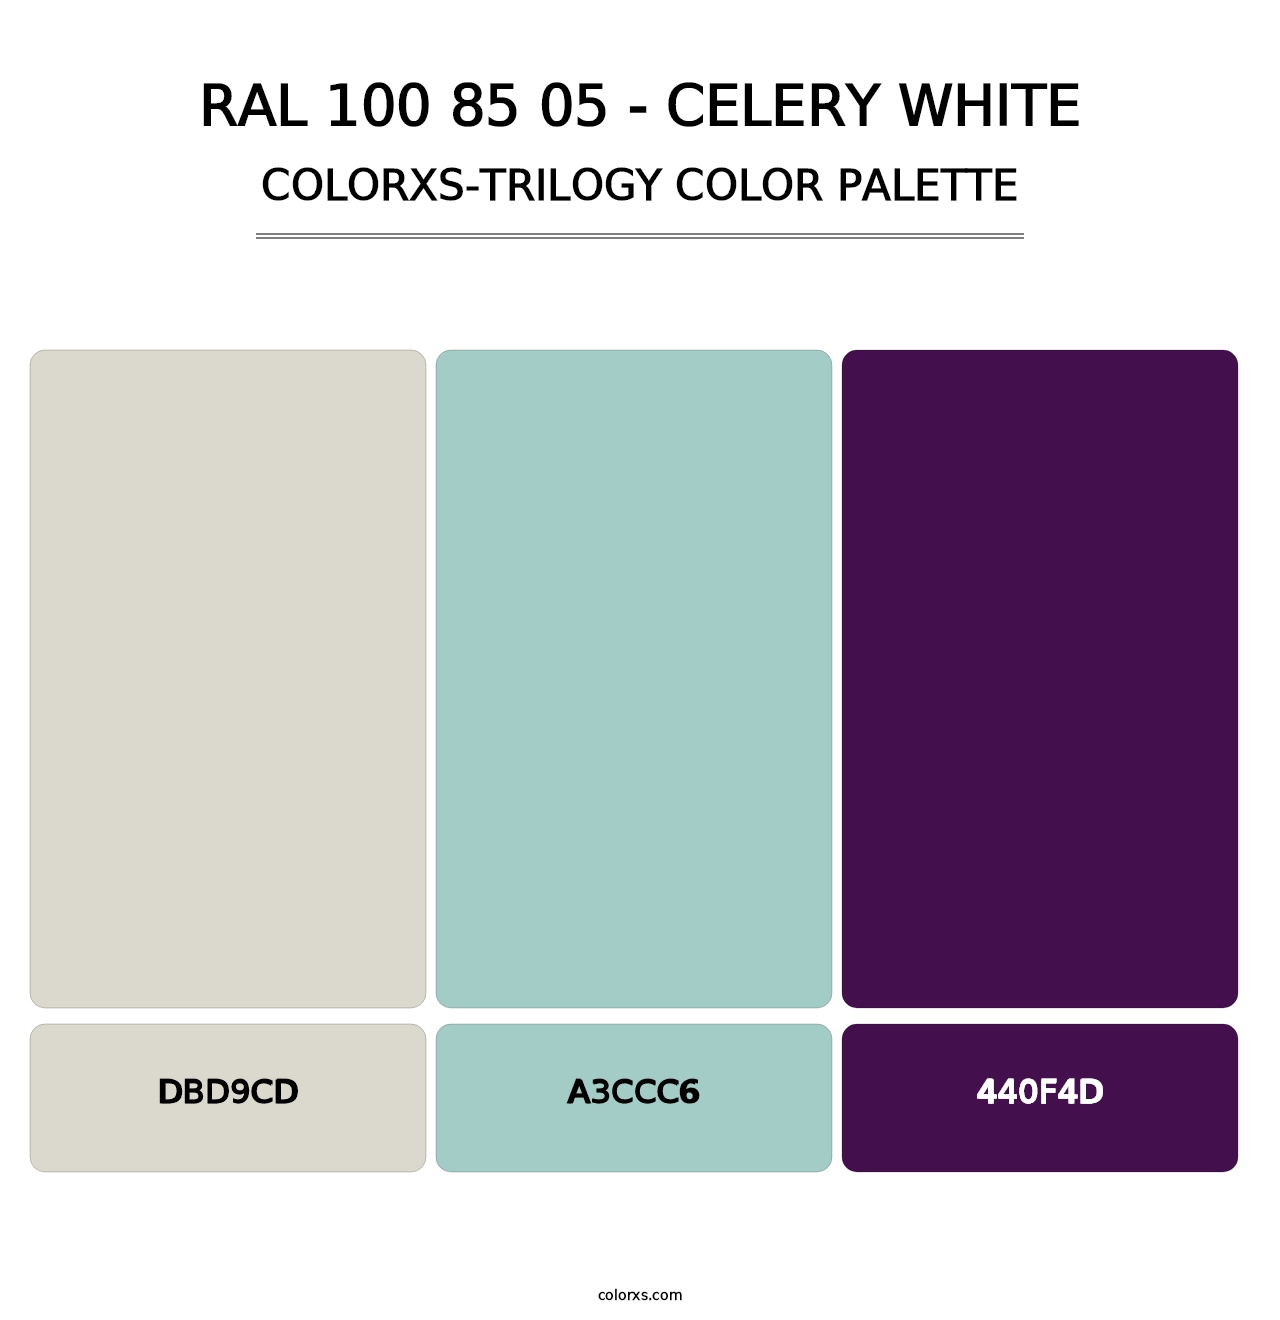 RAL 100 85 05 - Celery White - Colorxs Trilogy Palette